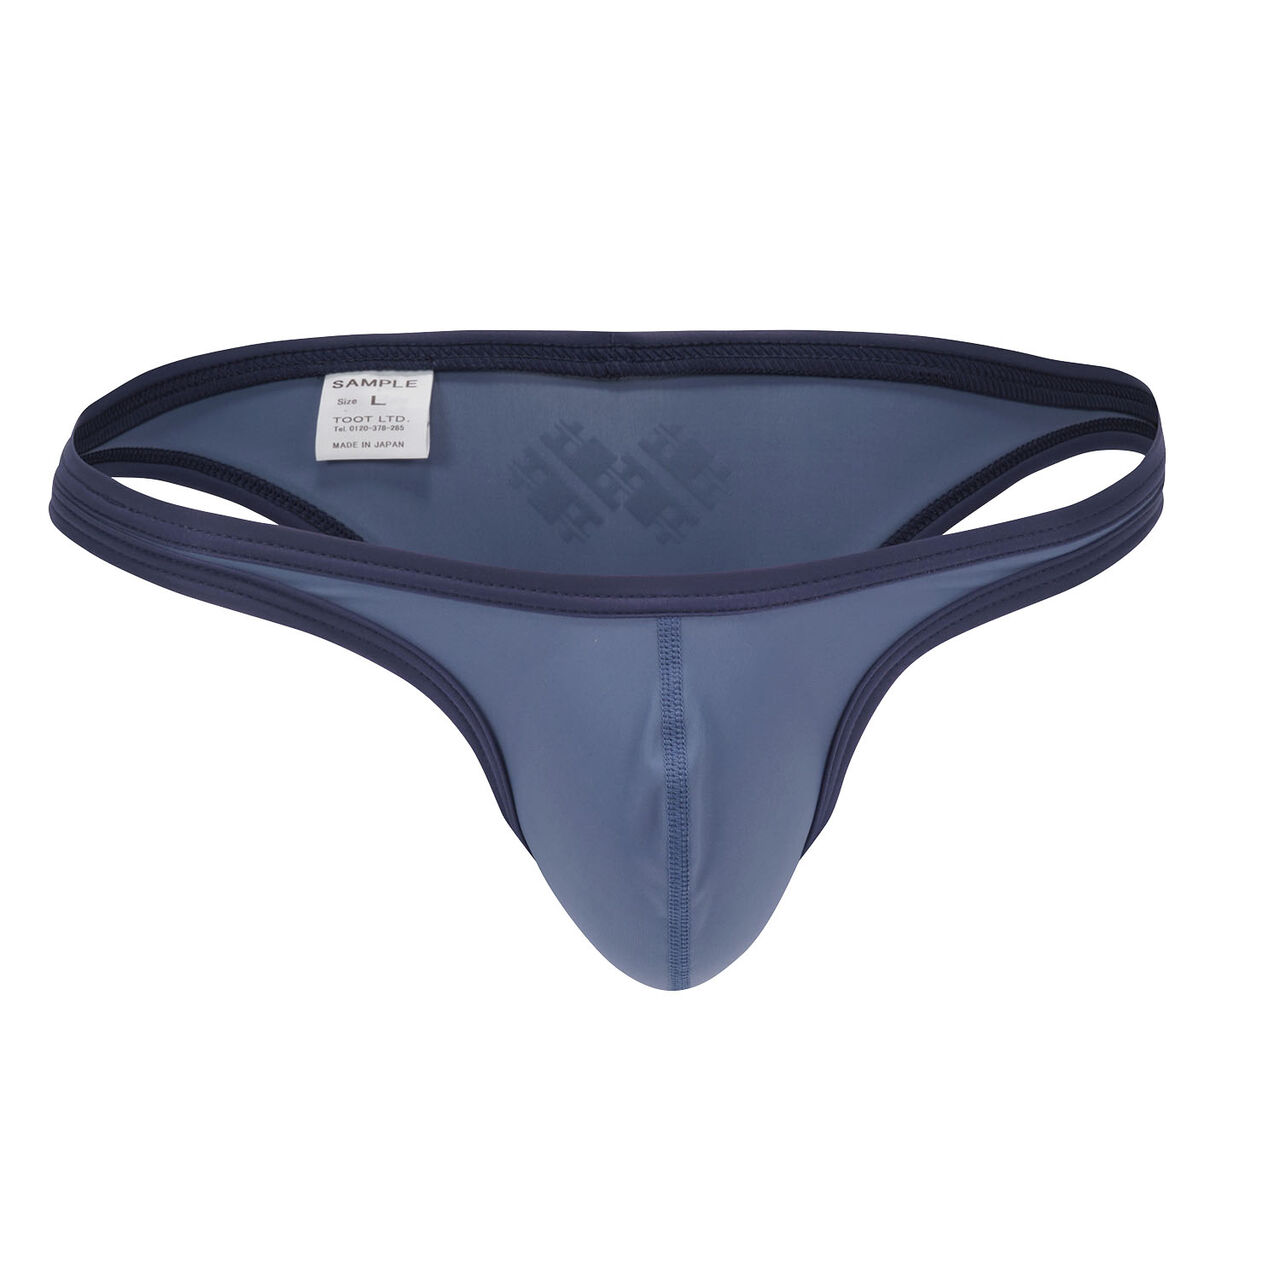 Emblem Print Bikini | Men's Underwear brand TOOT official website